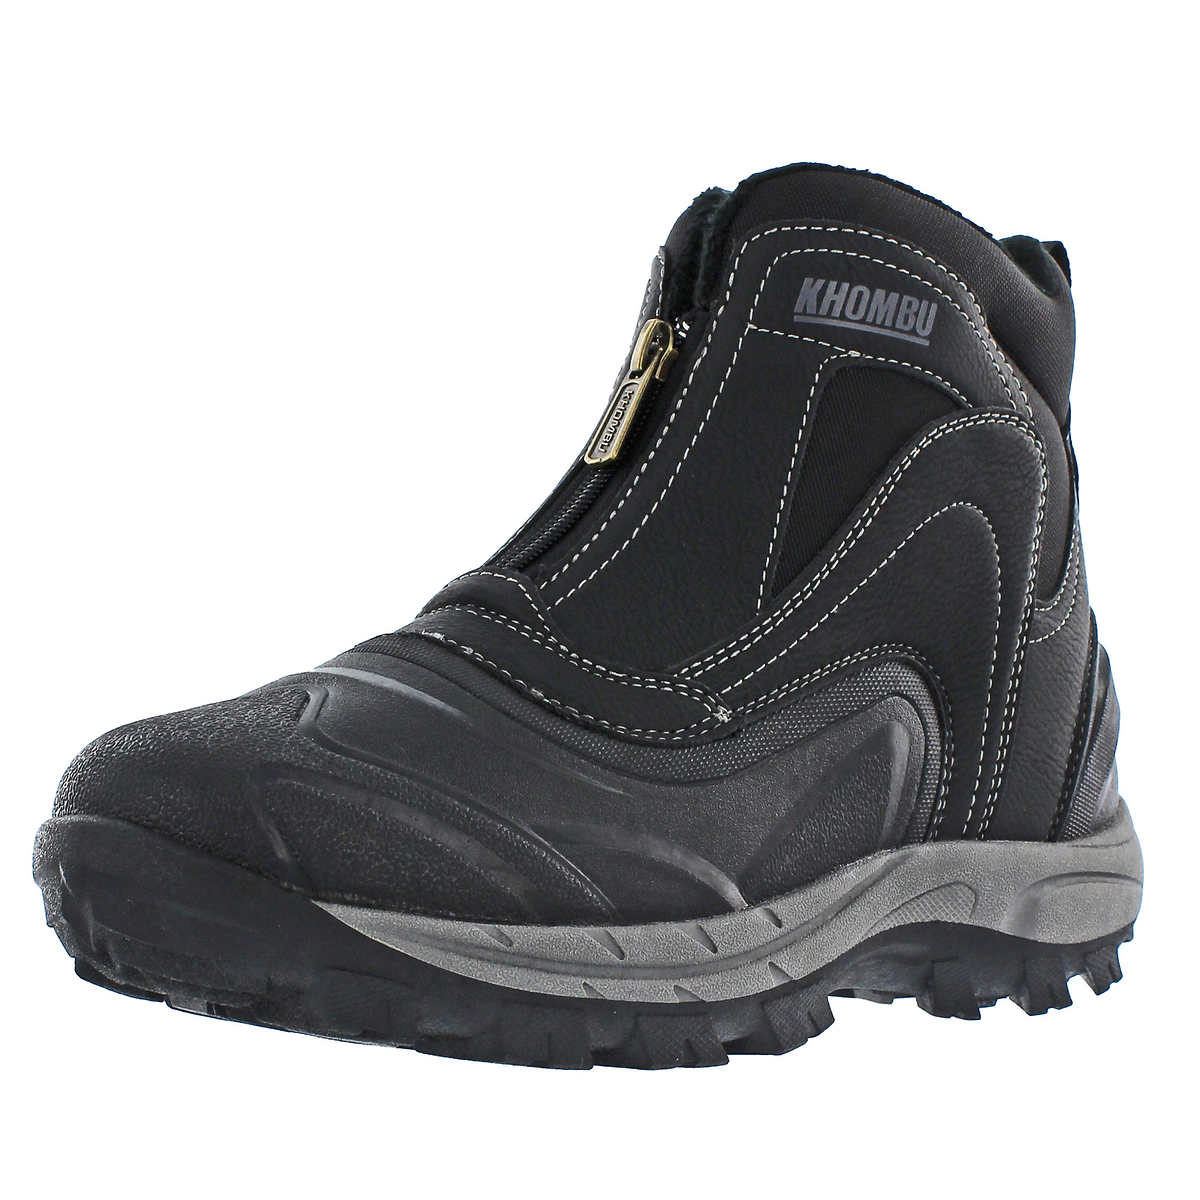 @Costco.com - Khombu Men's Hybrid Winter Boot  $19.97 or 3 for $45